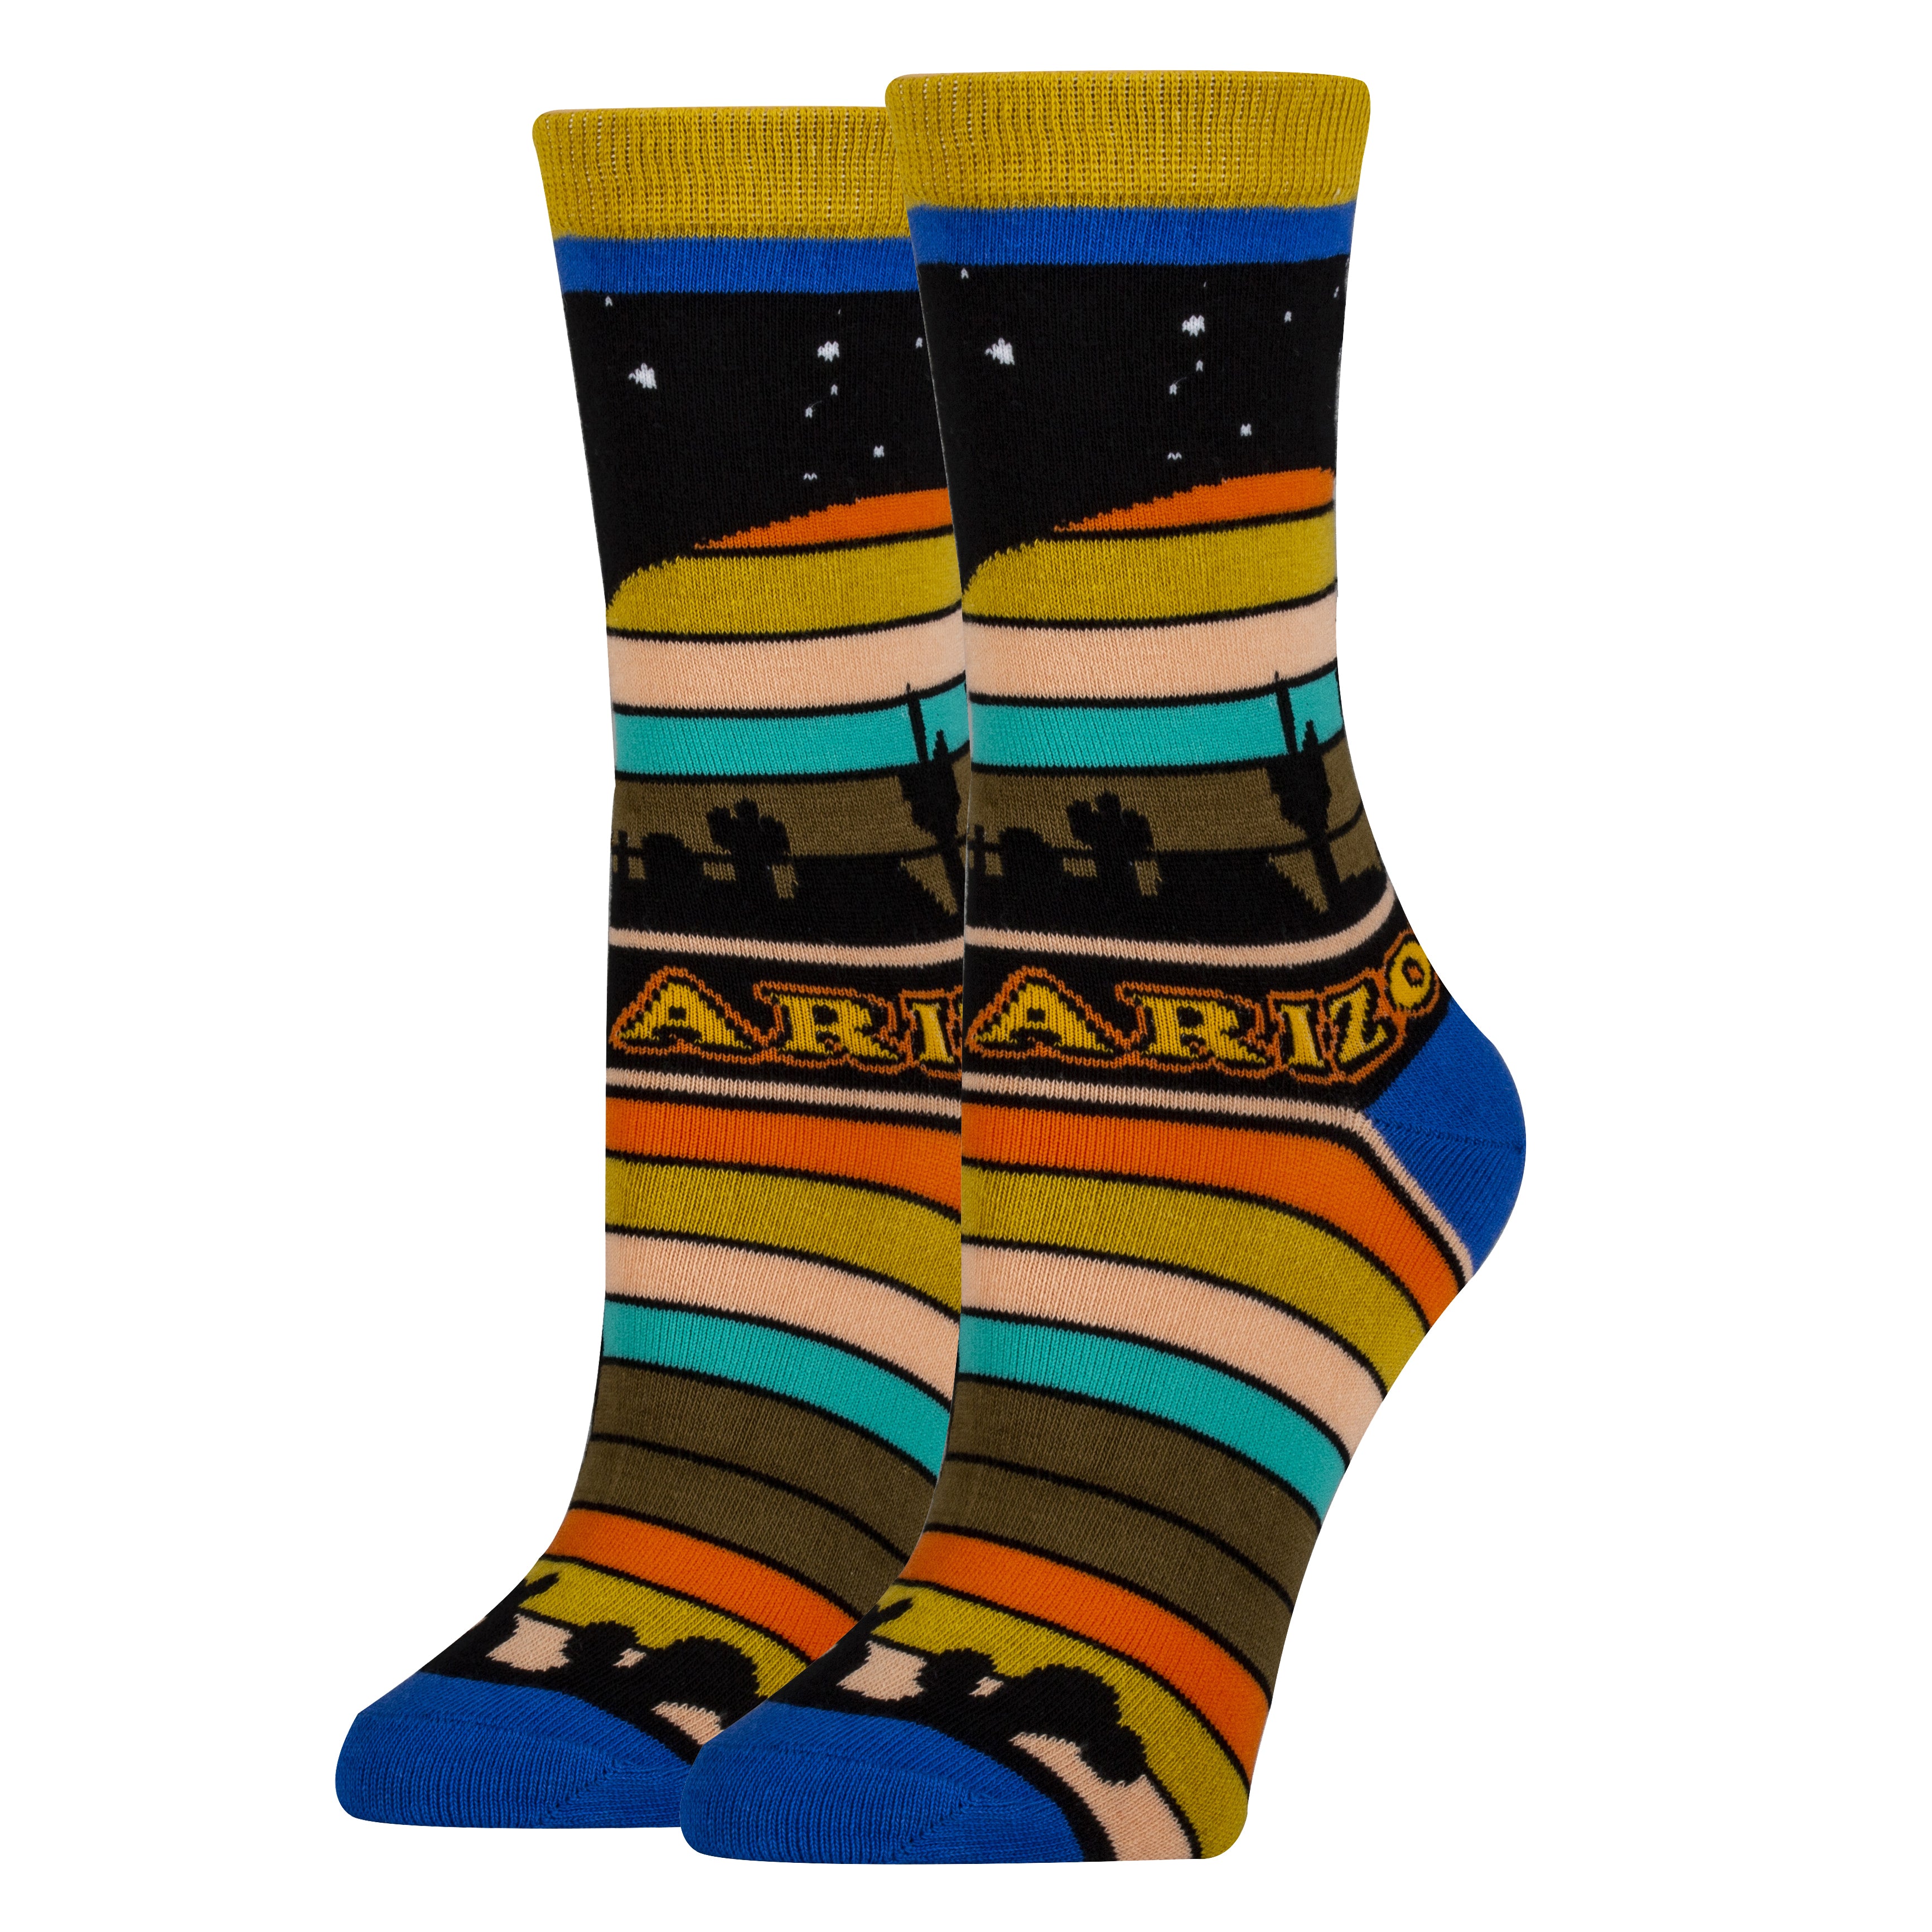 Arizona Socks | Novelty Crew Socks For Men | Oooh Yeah! Socks